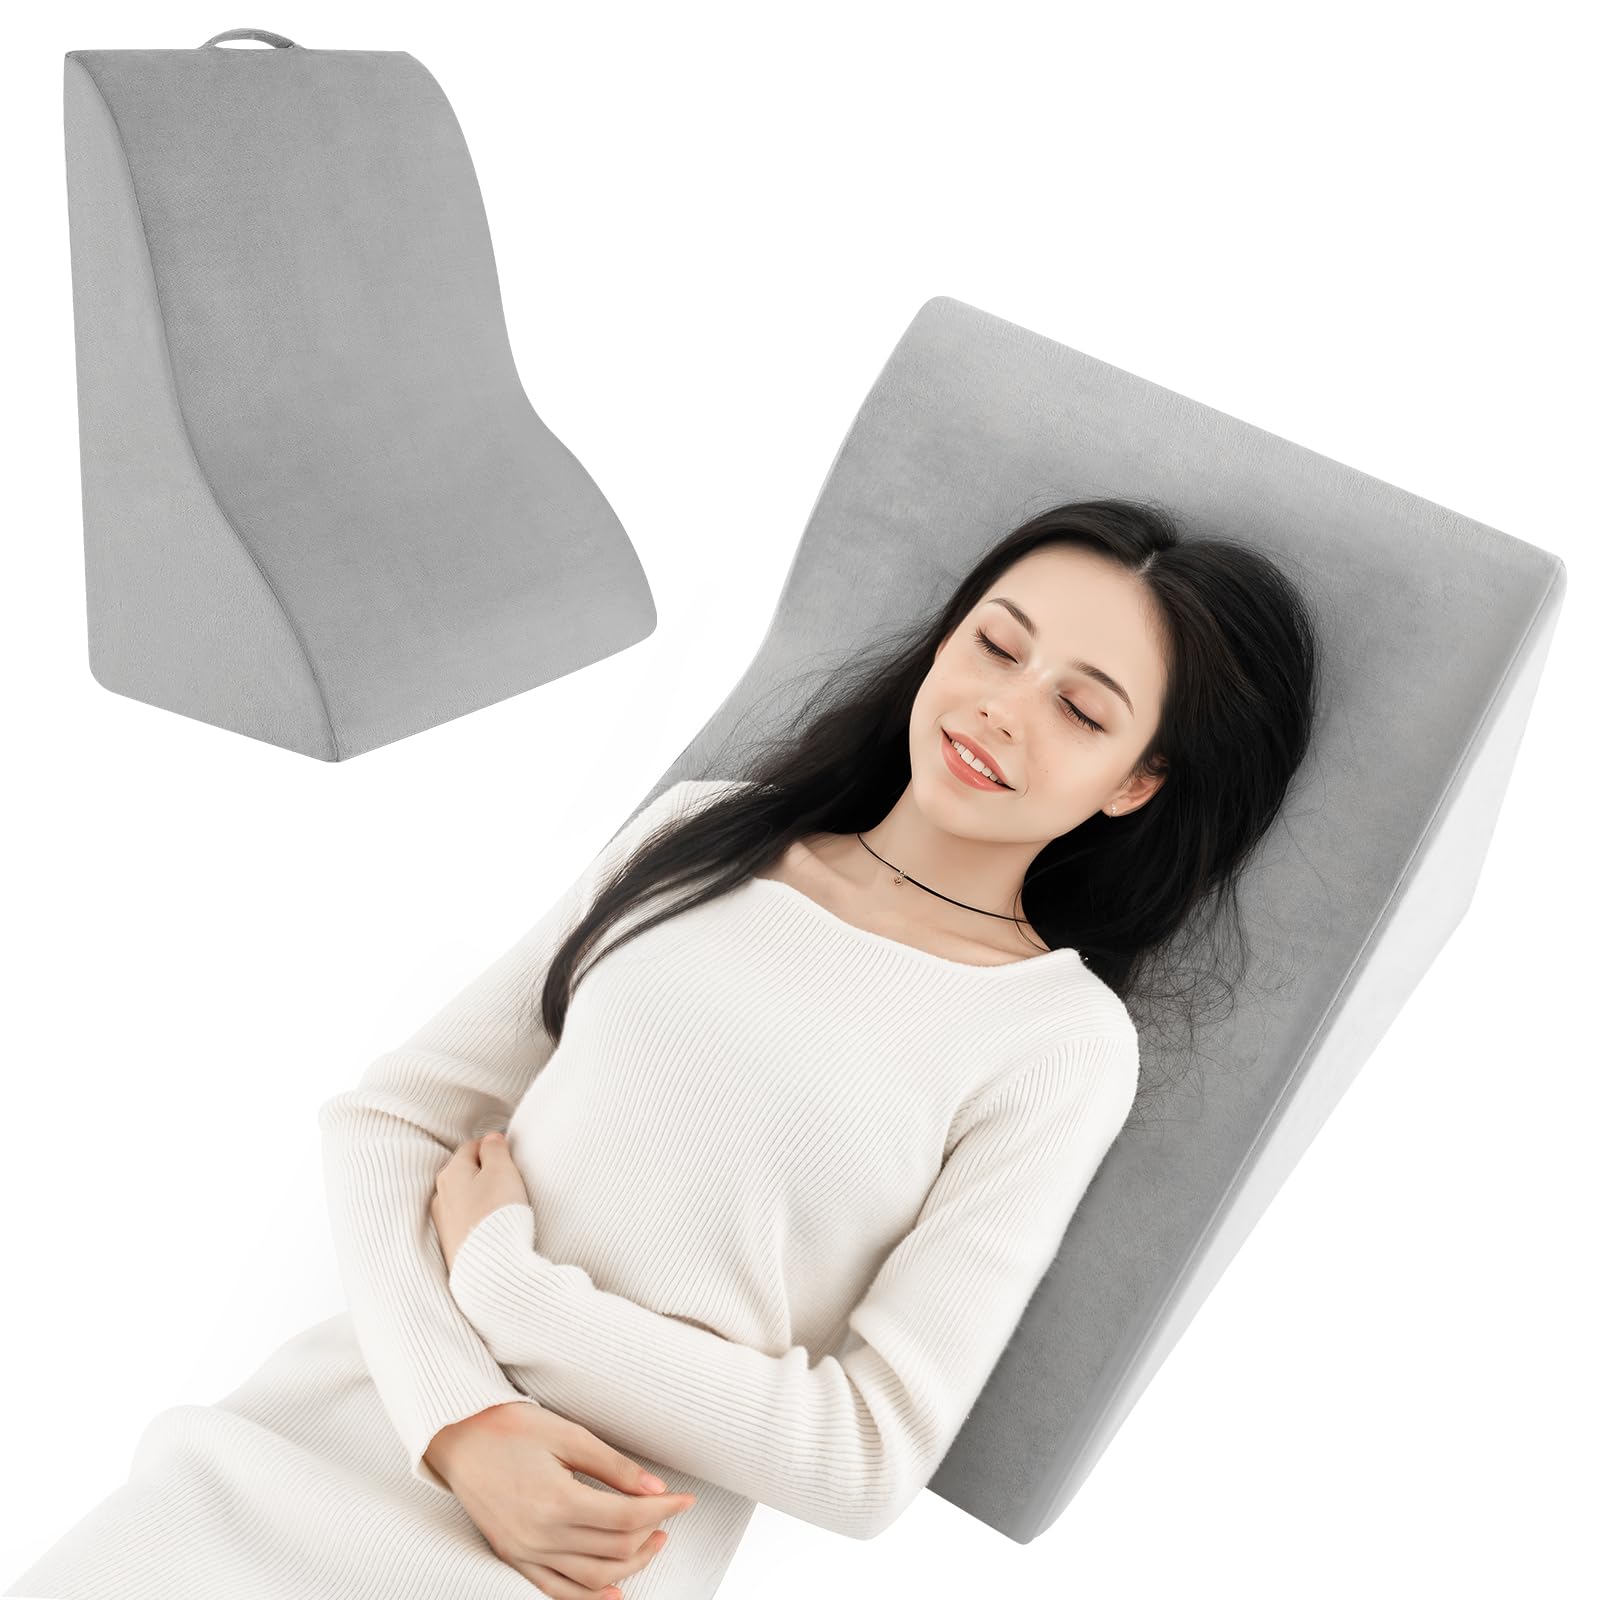 Giantex Wedge Pillow for Sleeping